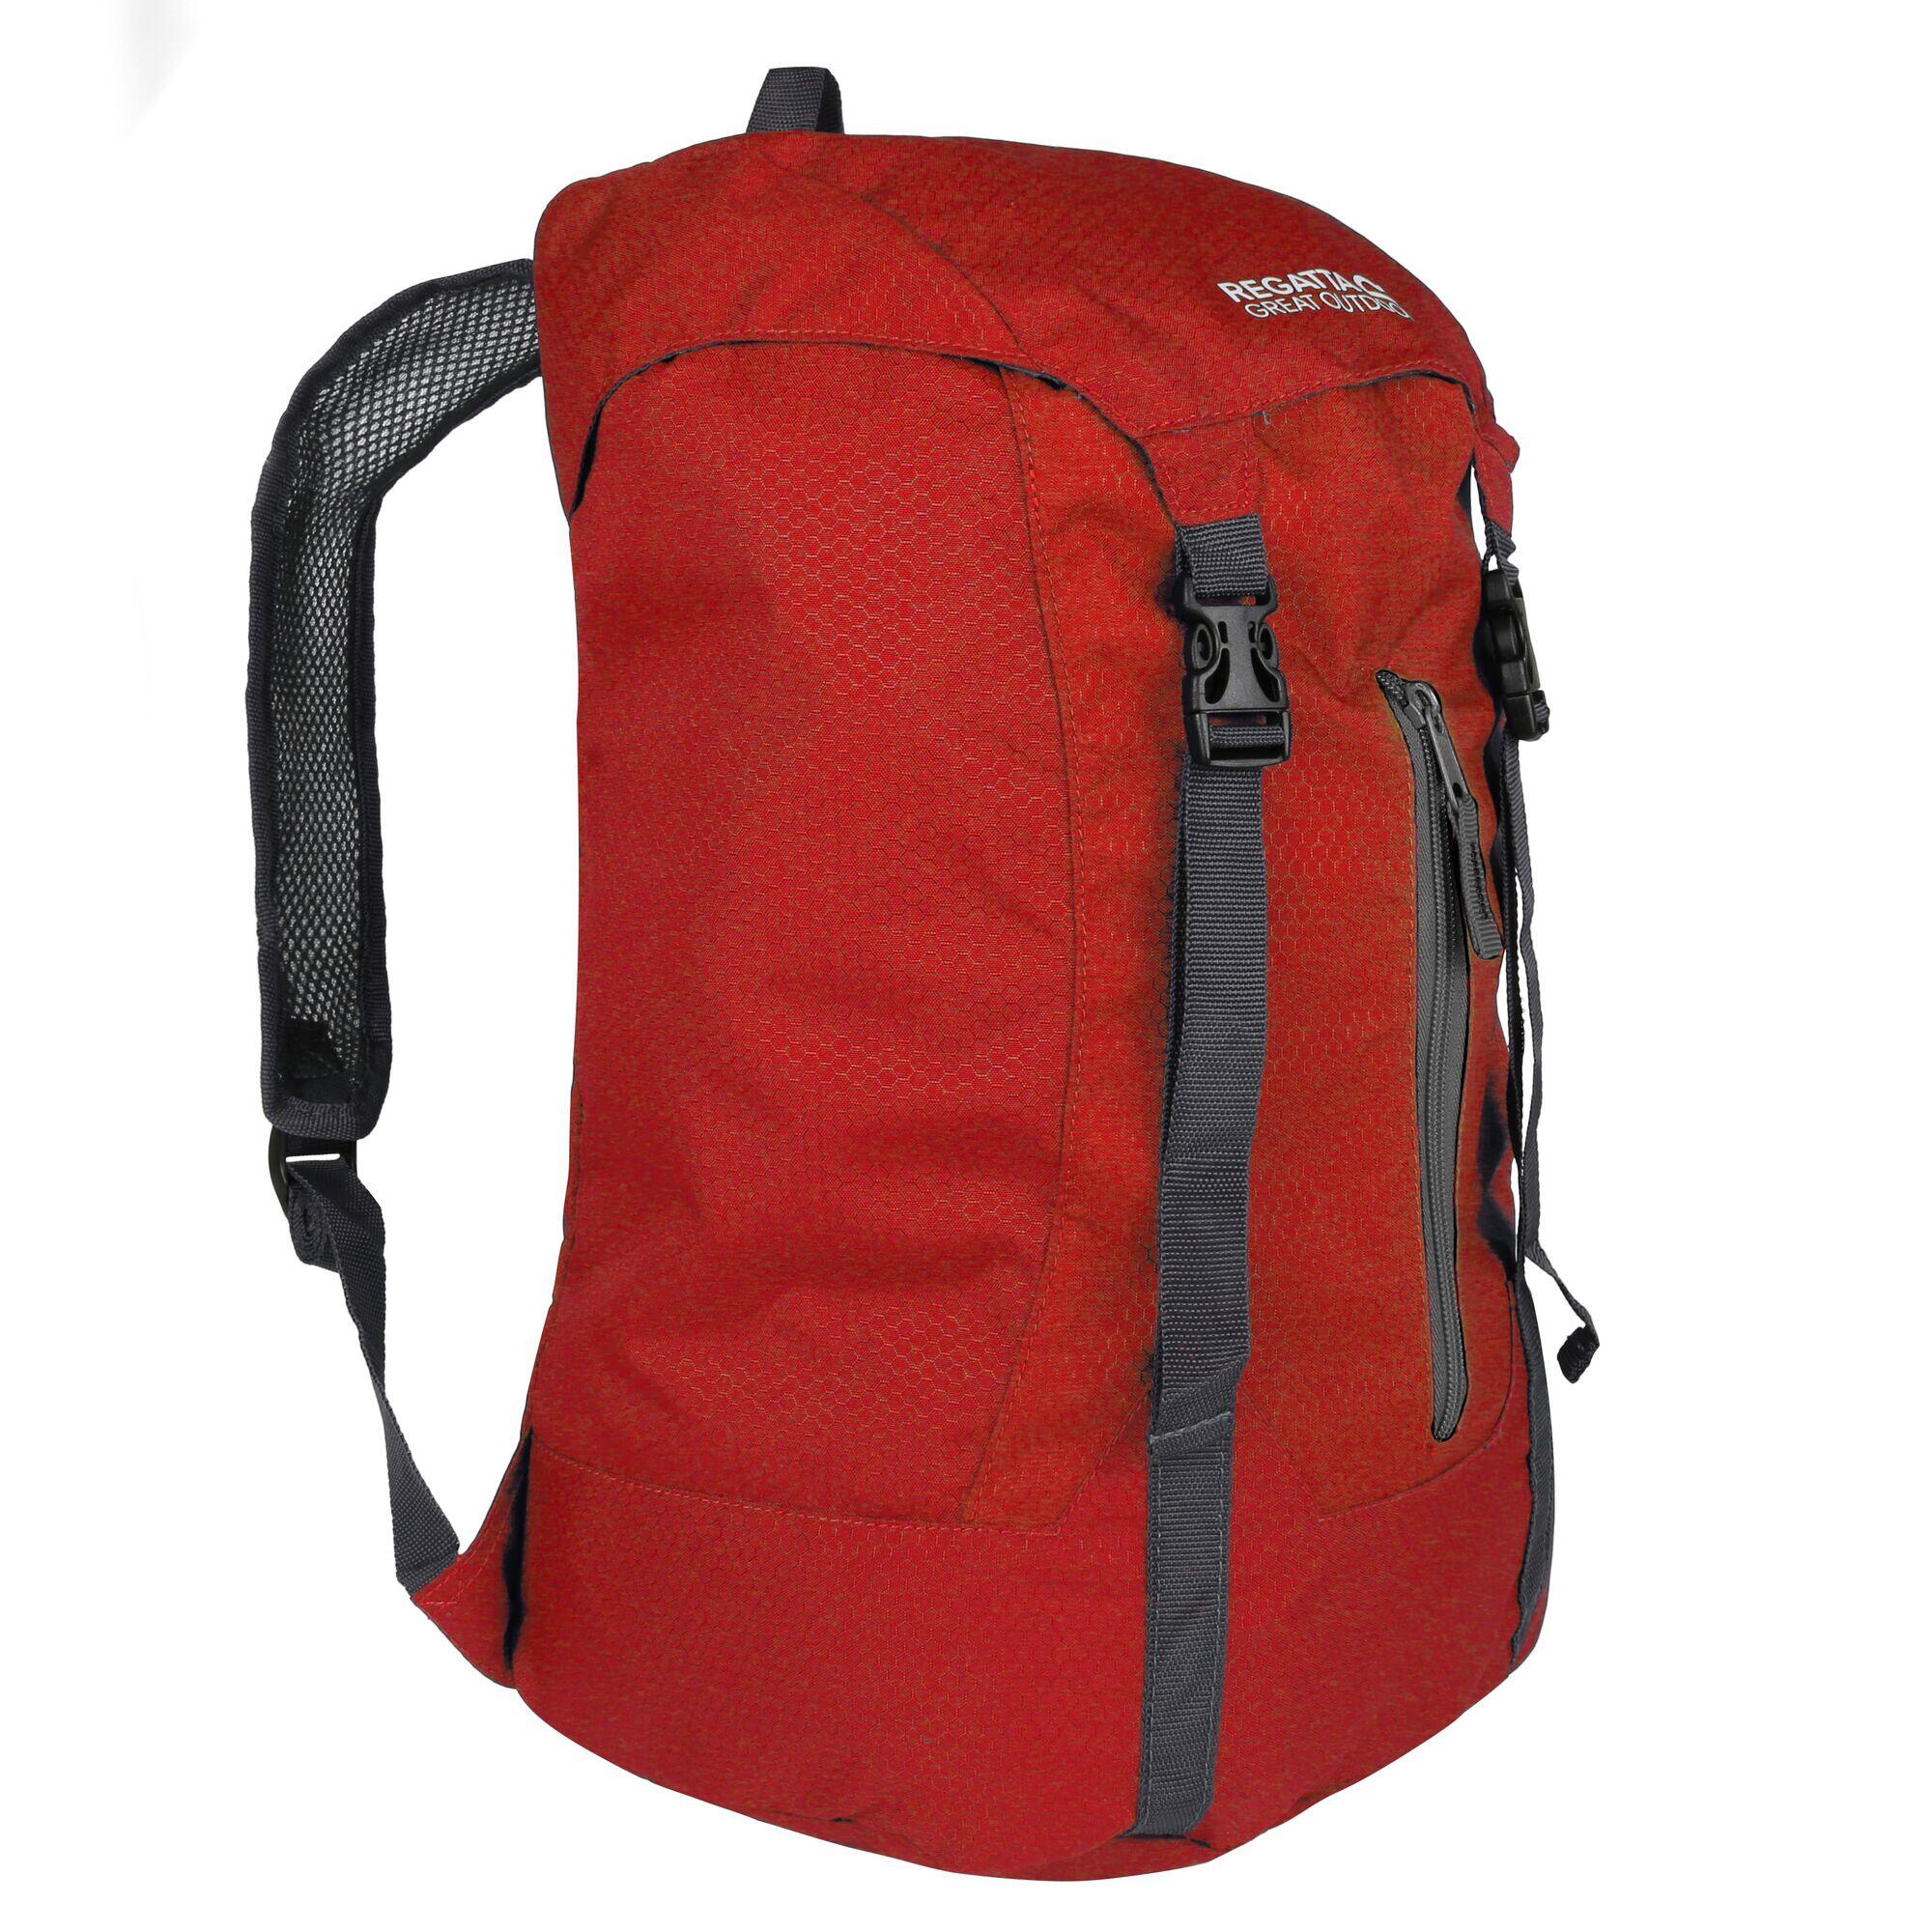 REGATTA Easypack Packaway 25L Adults' Unisex Hiking Rucksack - Pepper Red